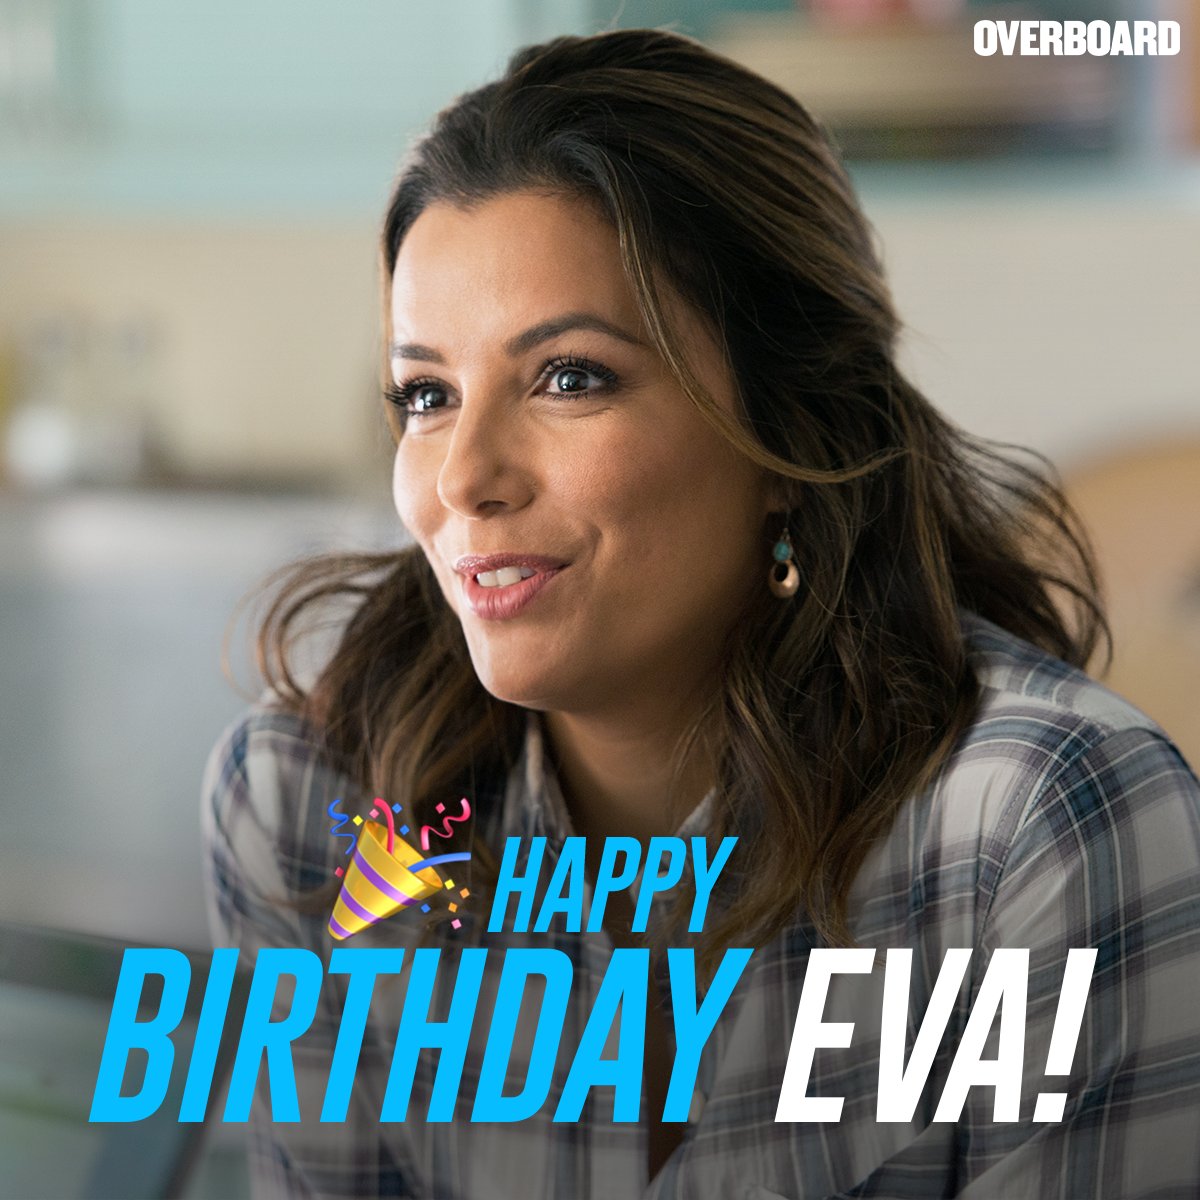 RT @OverboardMovie: Happy birthday to our favorite partner in crime, @EvaLongoria. #OverboardMovie https://t.co/2WmgucUwz3